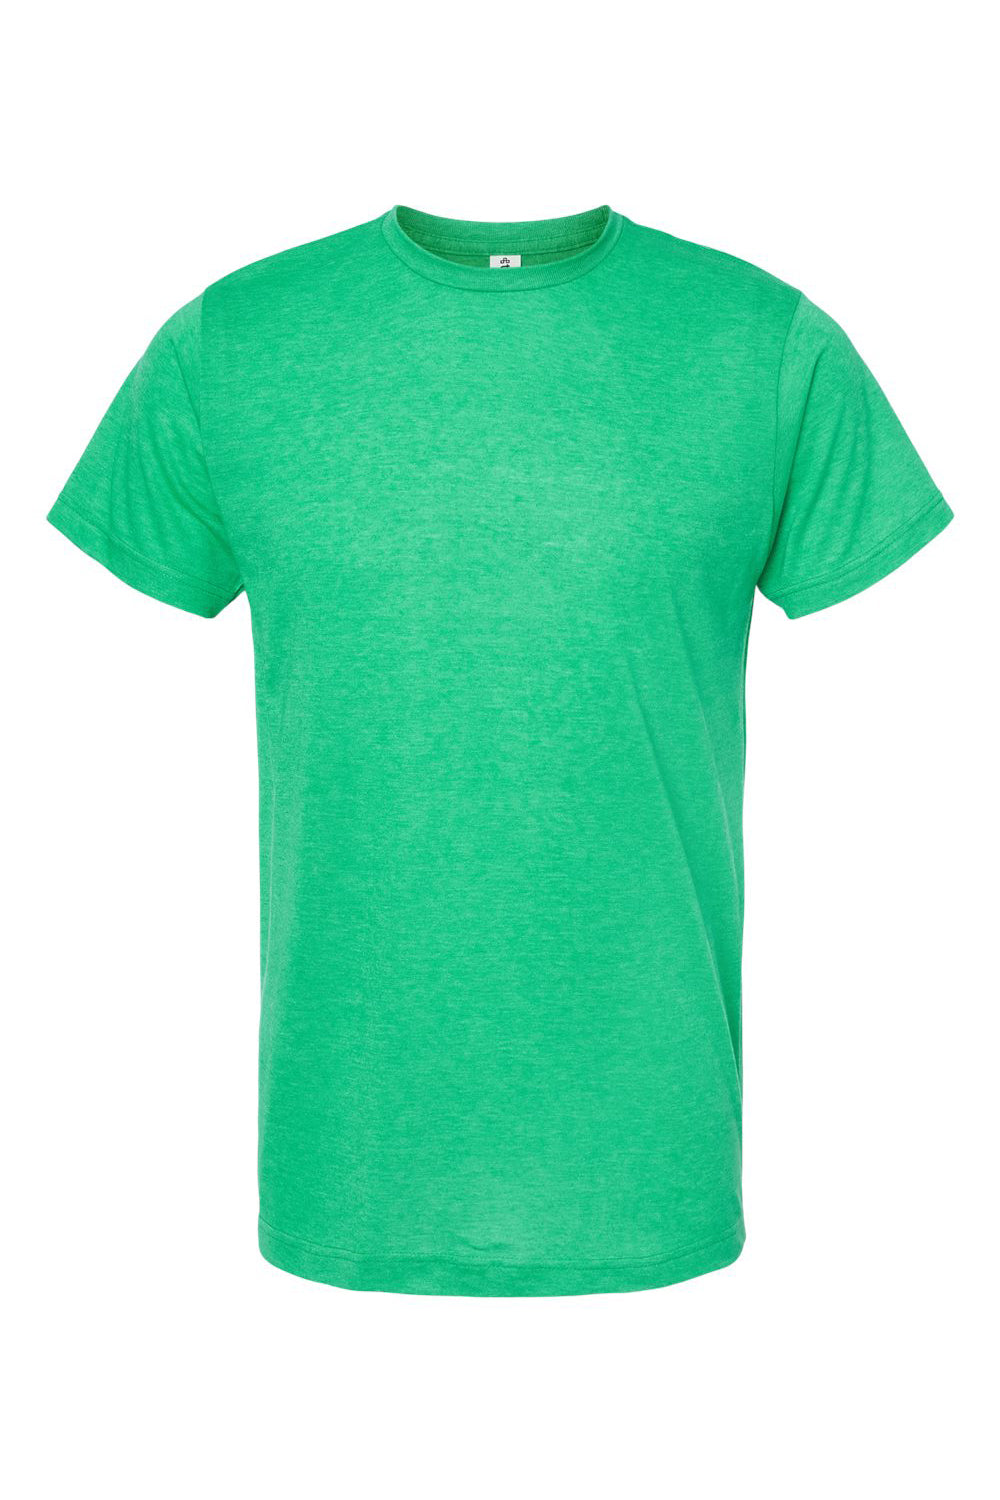 Tultex 241 Mens Poly-Rich Short Sleeve Crewneck T-Shirt Heather Kelly Green Flat Front